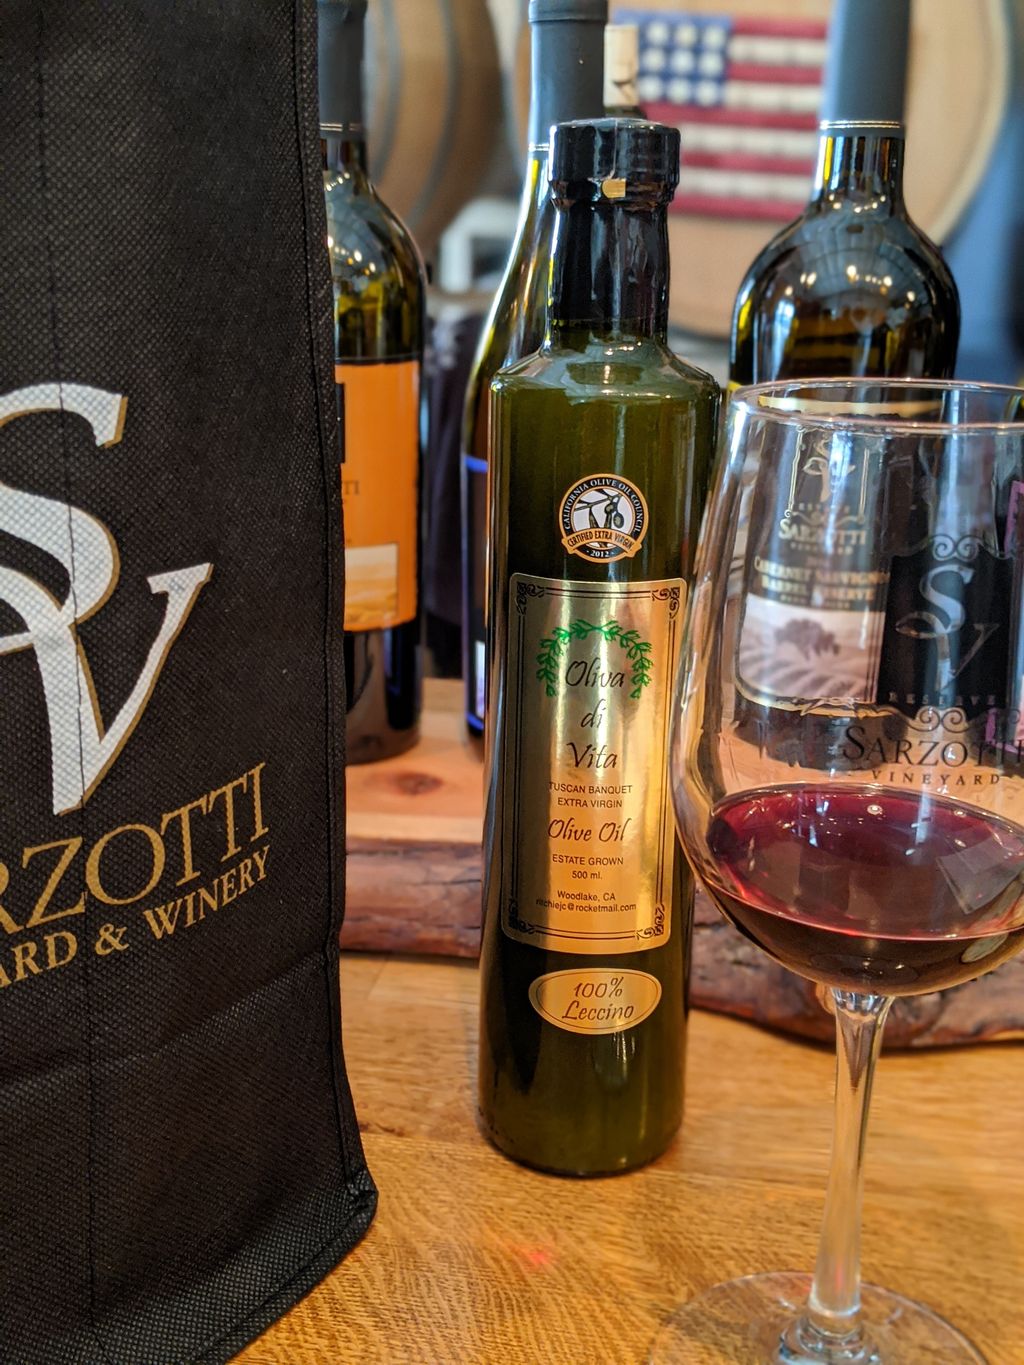 Sarzottis-Vineyard-Winery-1